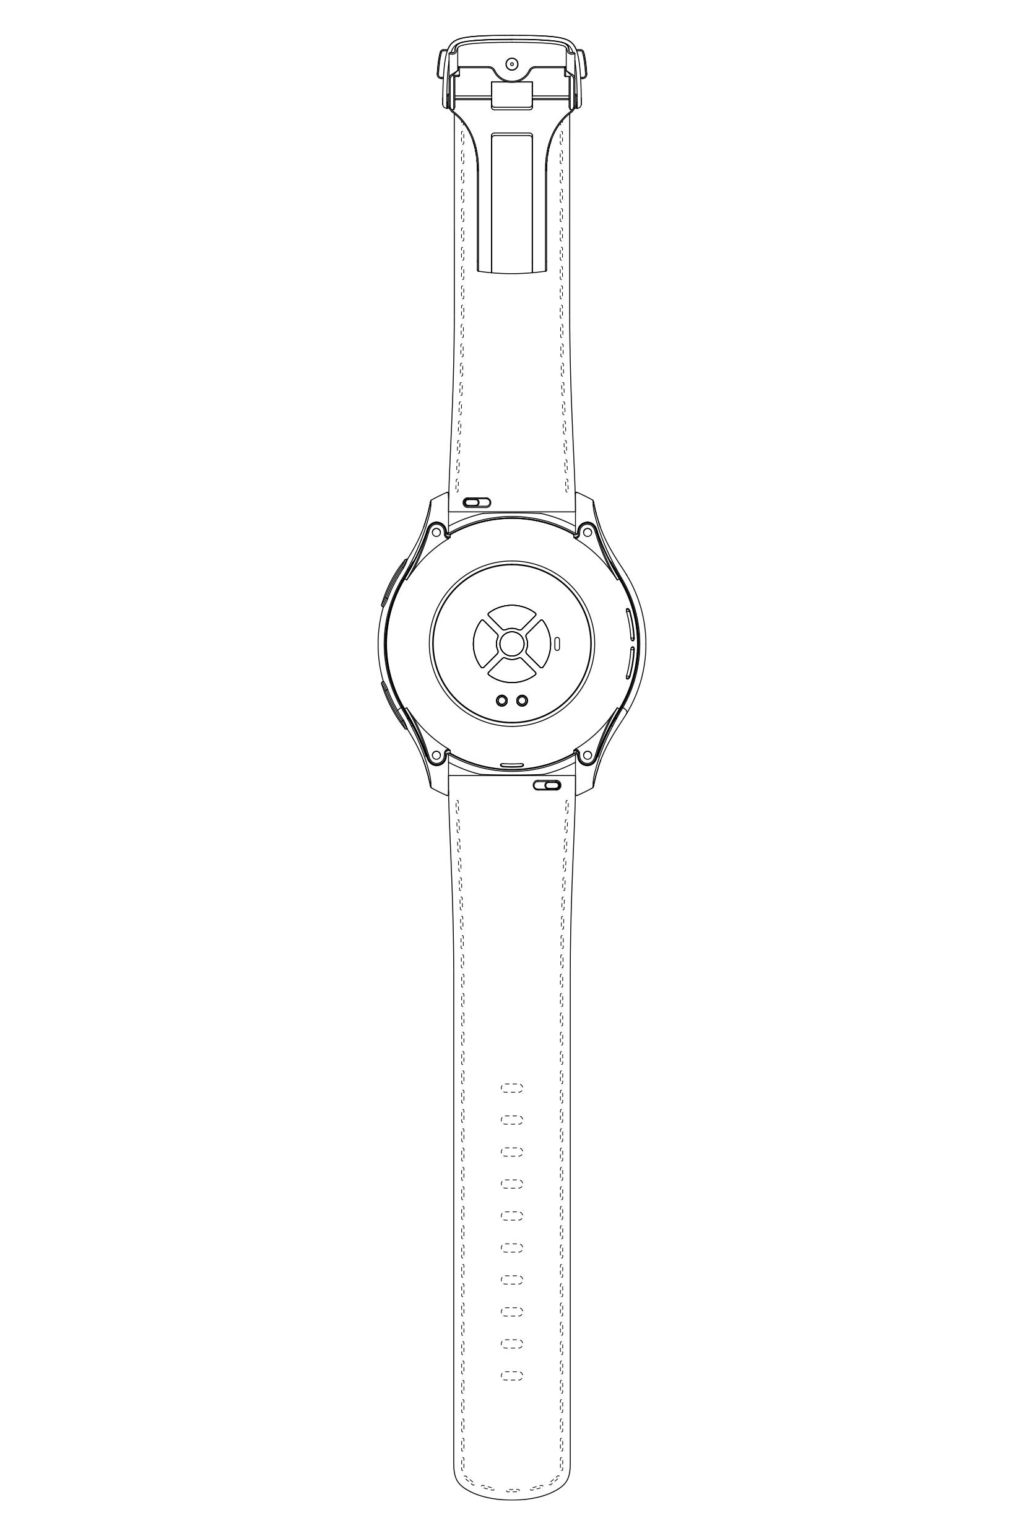 oneplus-watch-patent-2-1024x1536.jpg